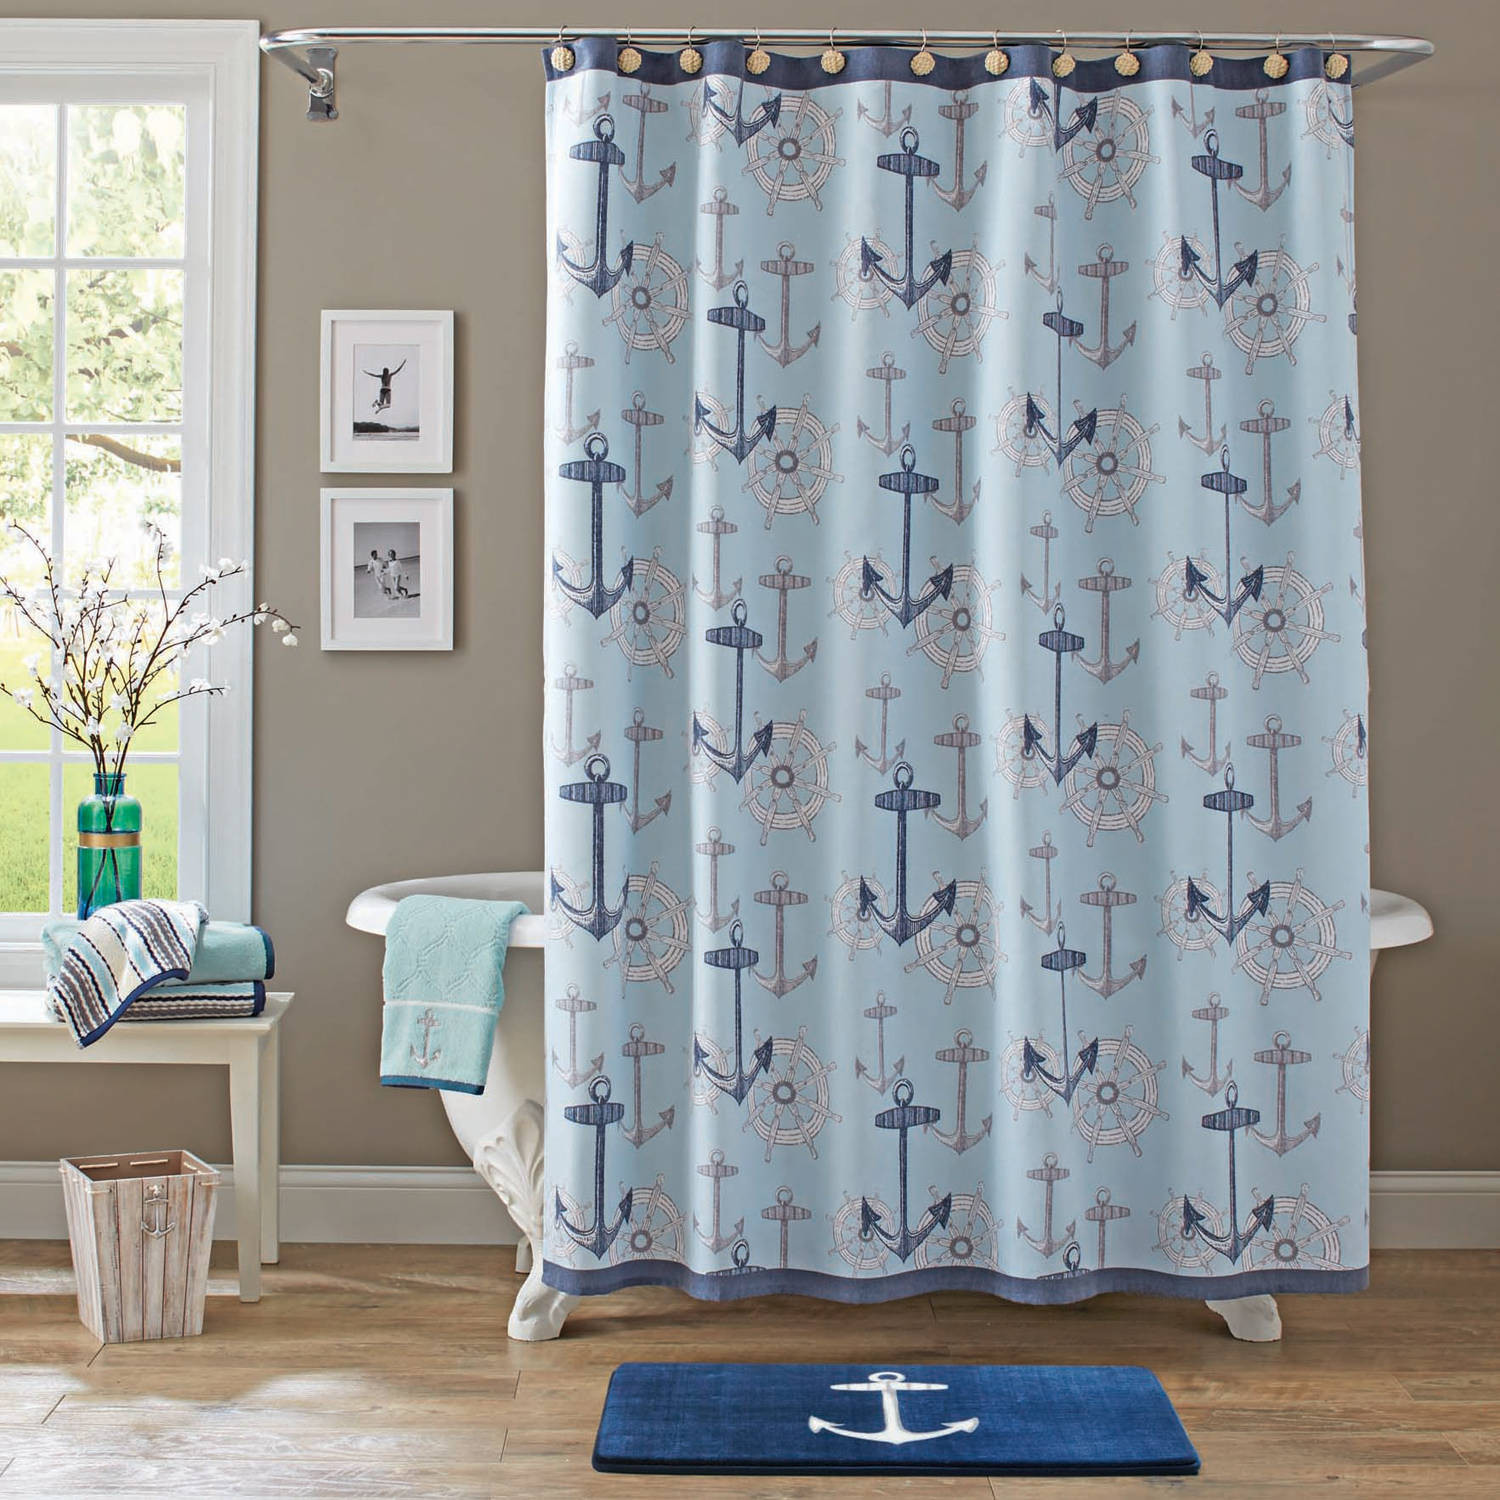 Walmart Bathroom Shower Curtain Sets
 Curtain Walmart Shower Curtain For Cute Your Bathroom